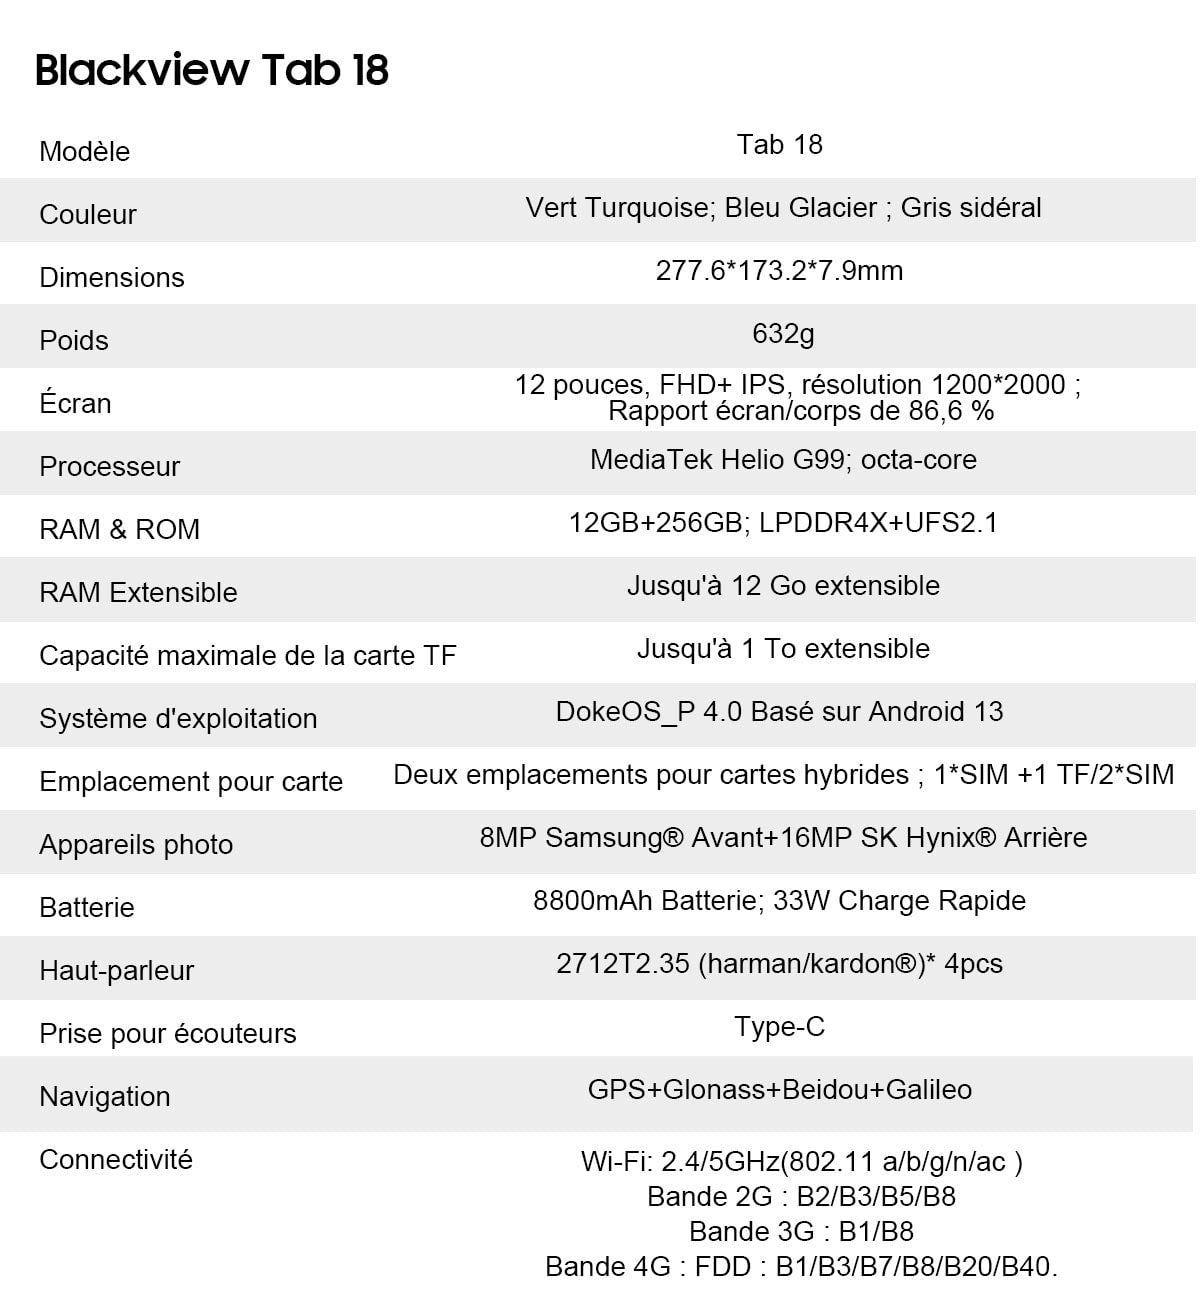 Blackview Tab 18 French description